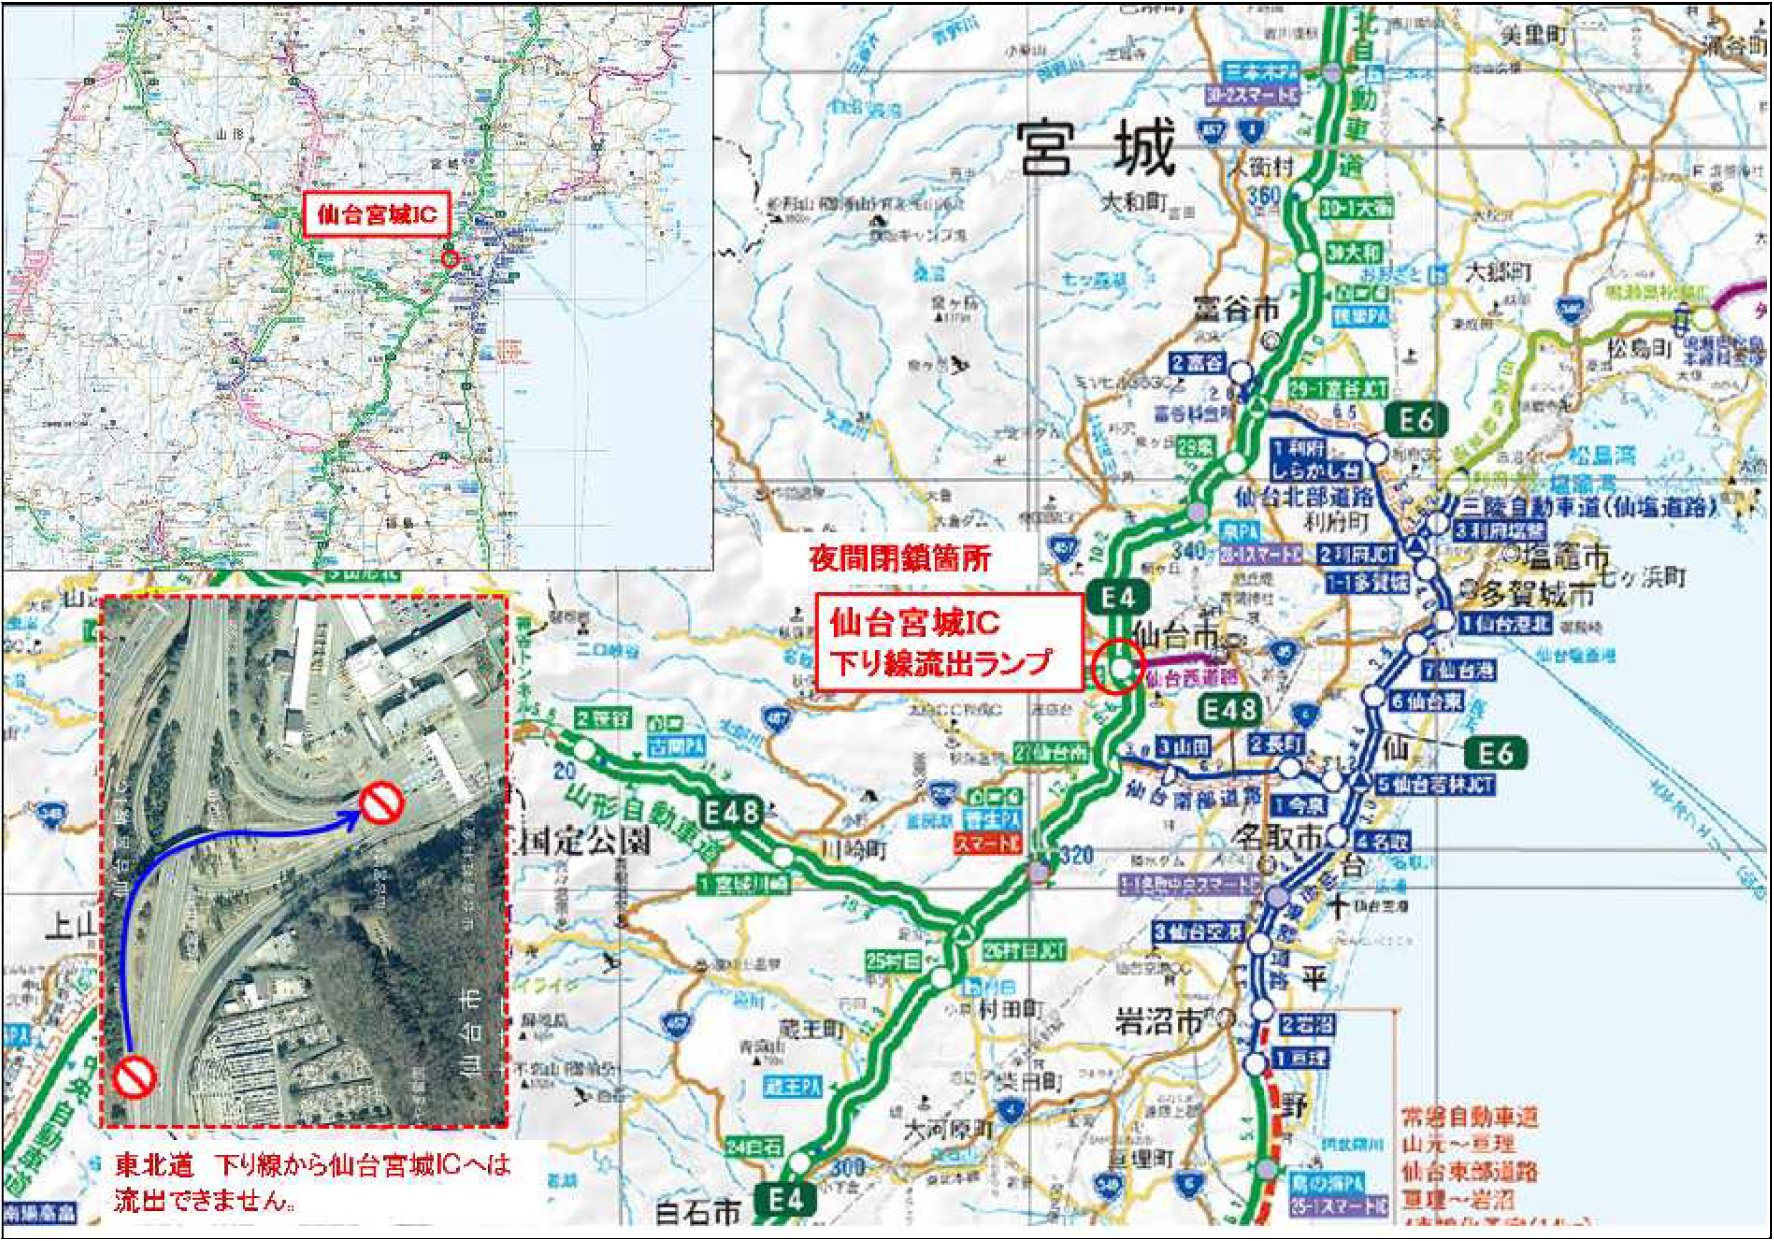 E4 東北自動車道 仙台宮城ic 下り線流出ランプ 夜間閉鎖の実施 Nexco東日本